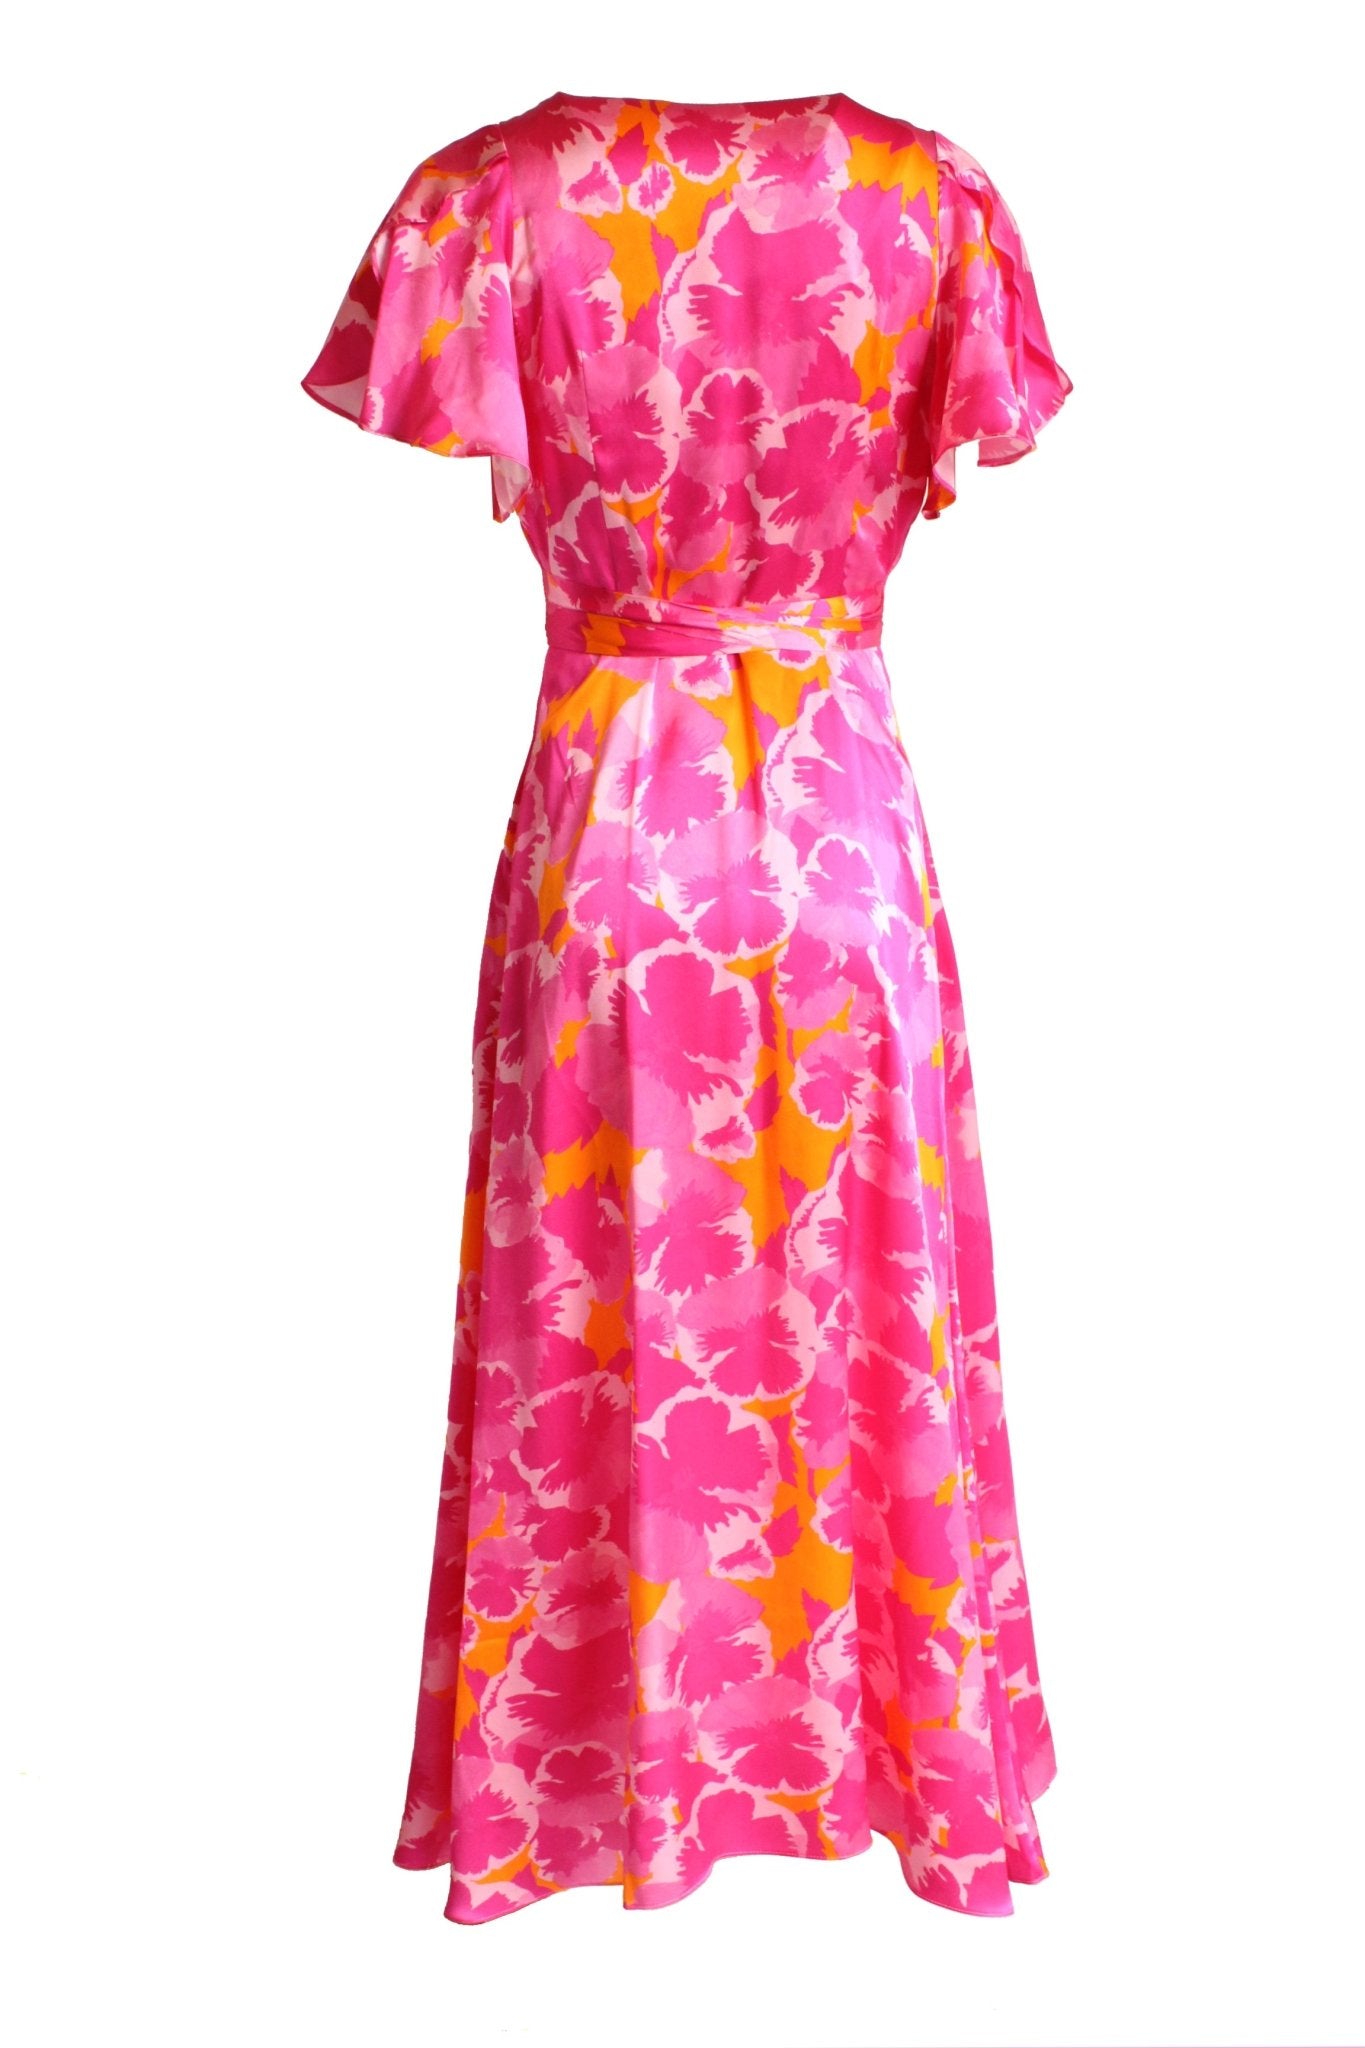 LeDoré Stacey Dress - Viola Floral Orange/Pink - Sweepstake Winners™